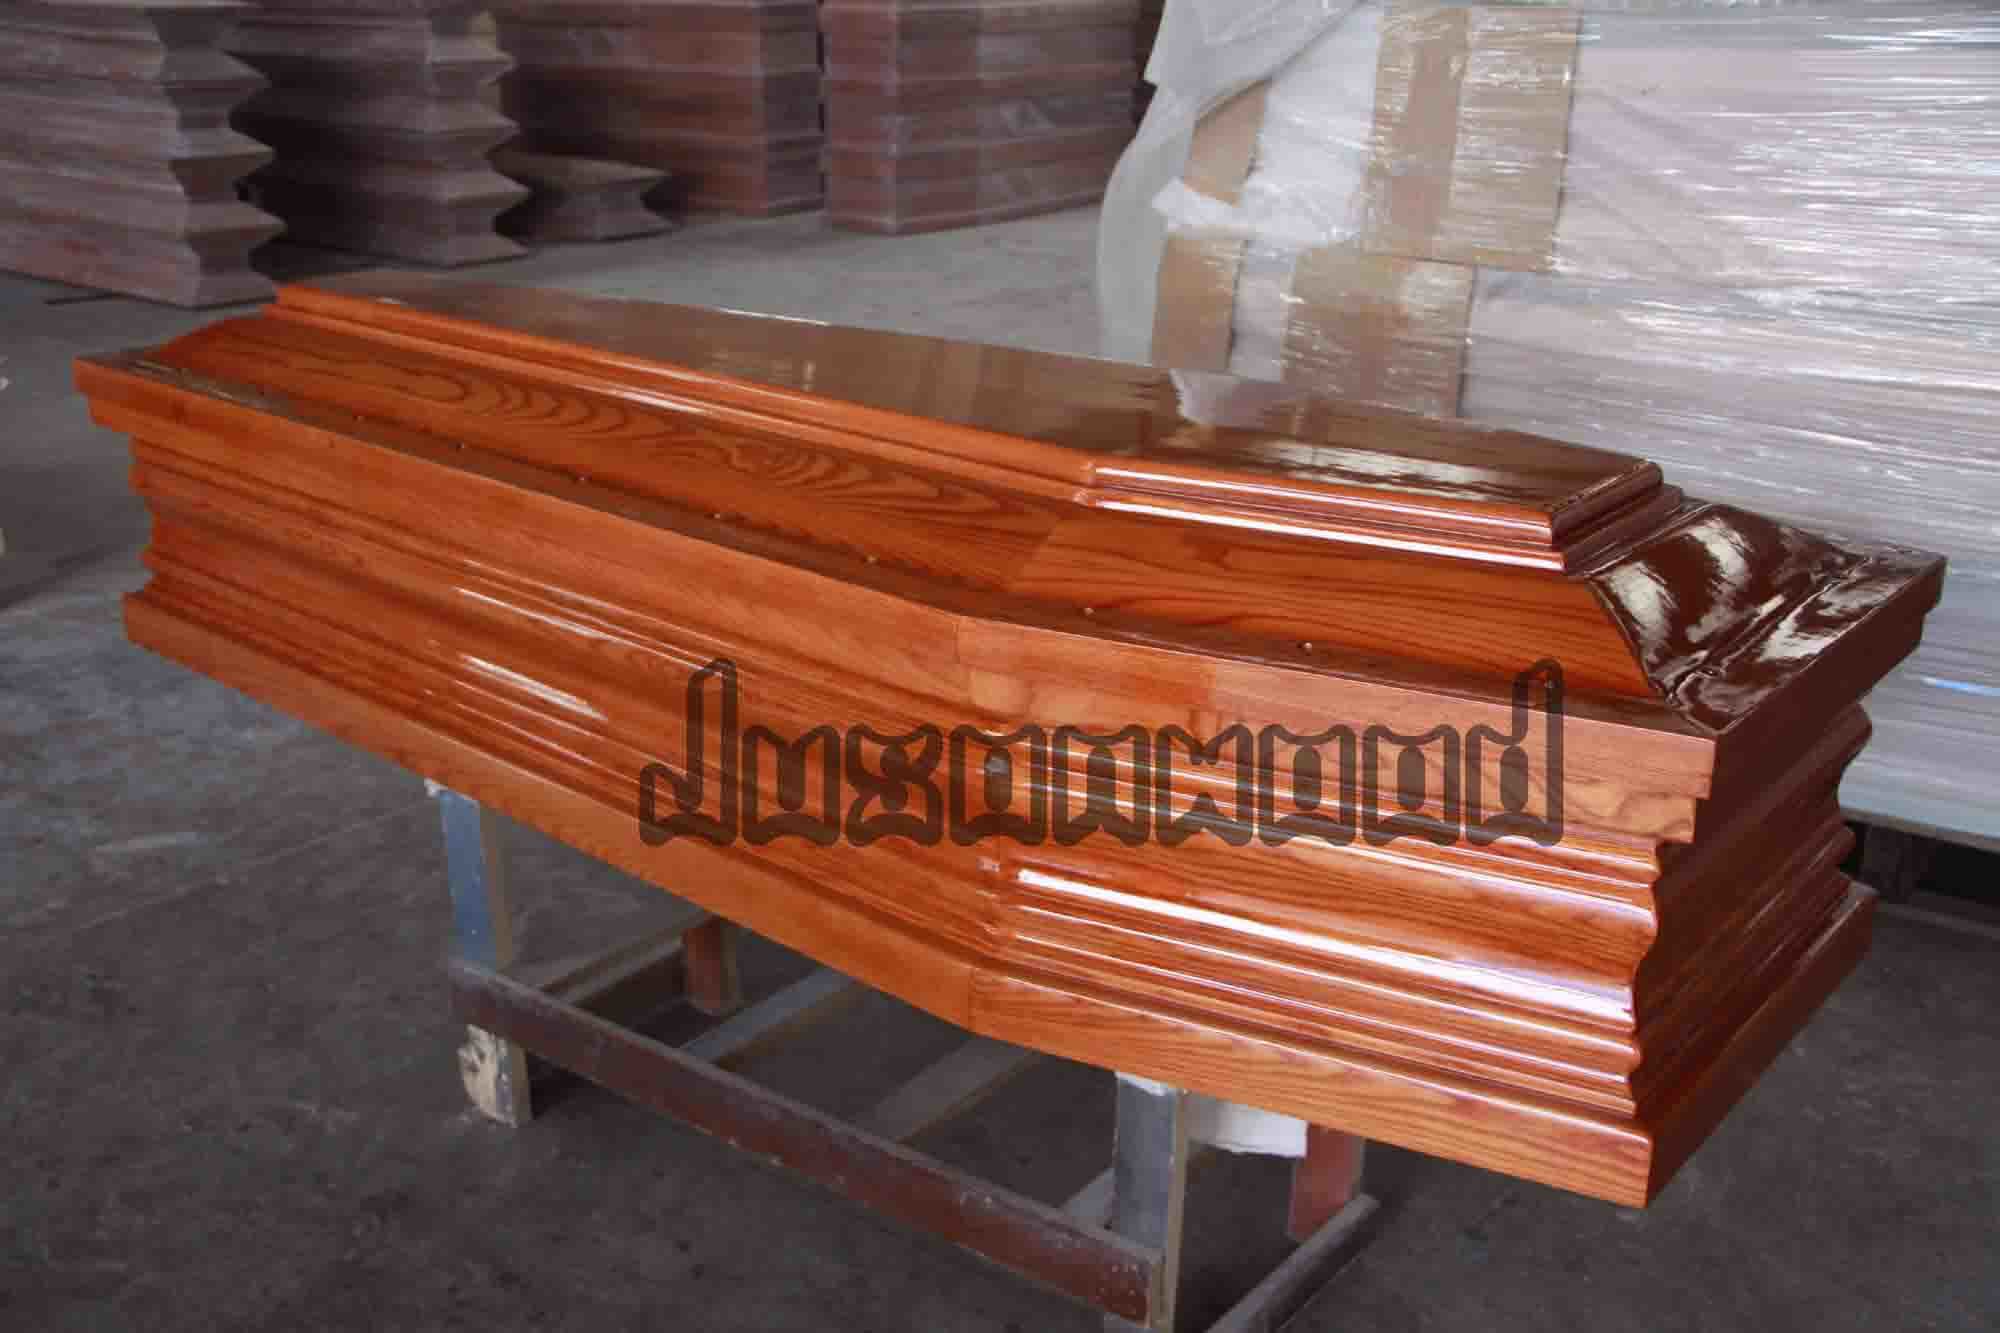 Coffin Accessories (JS-IT FLAVIA)